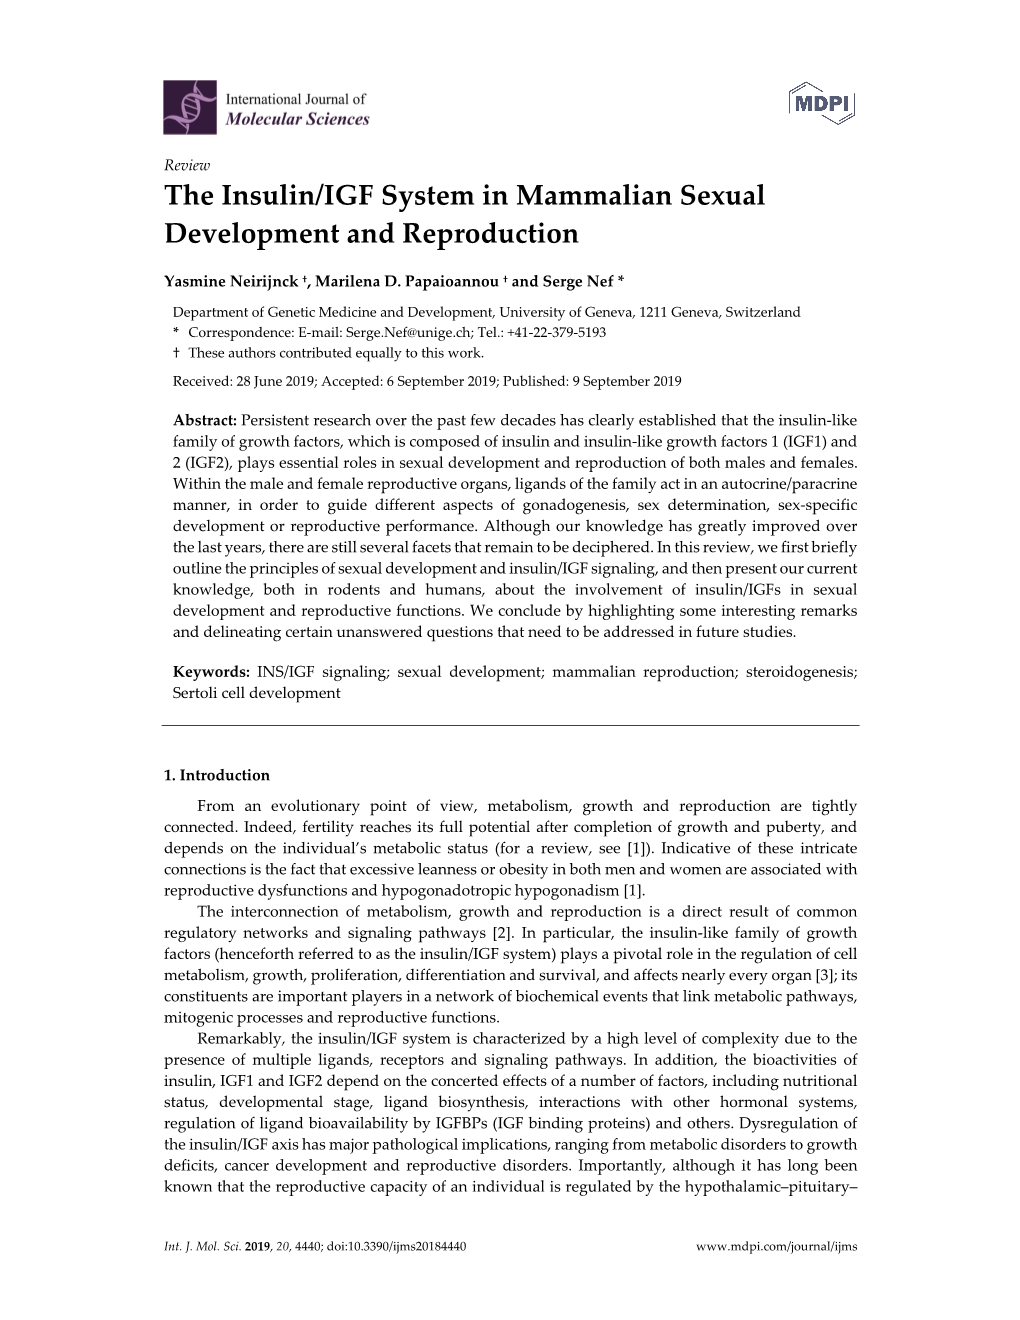 The Insulin/IGF System in Mammalian Sexual Development and Reproduction